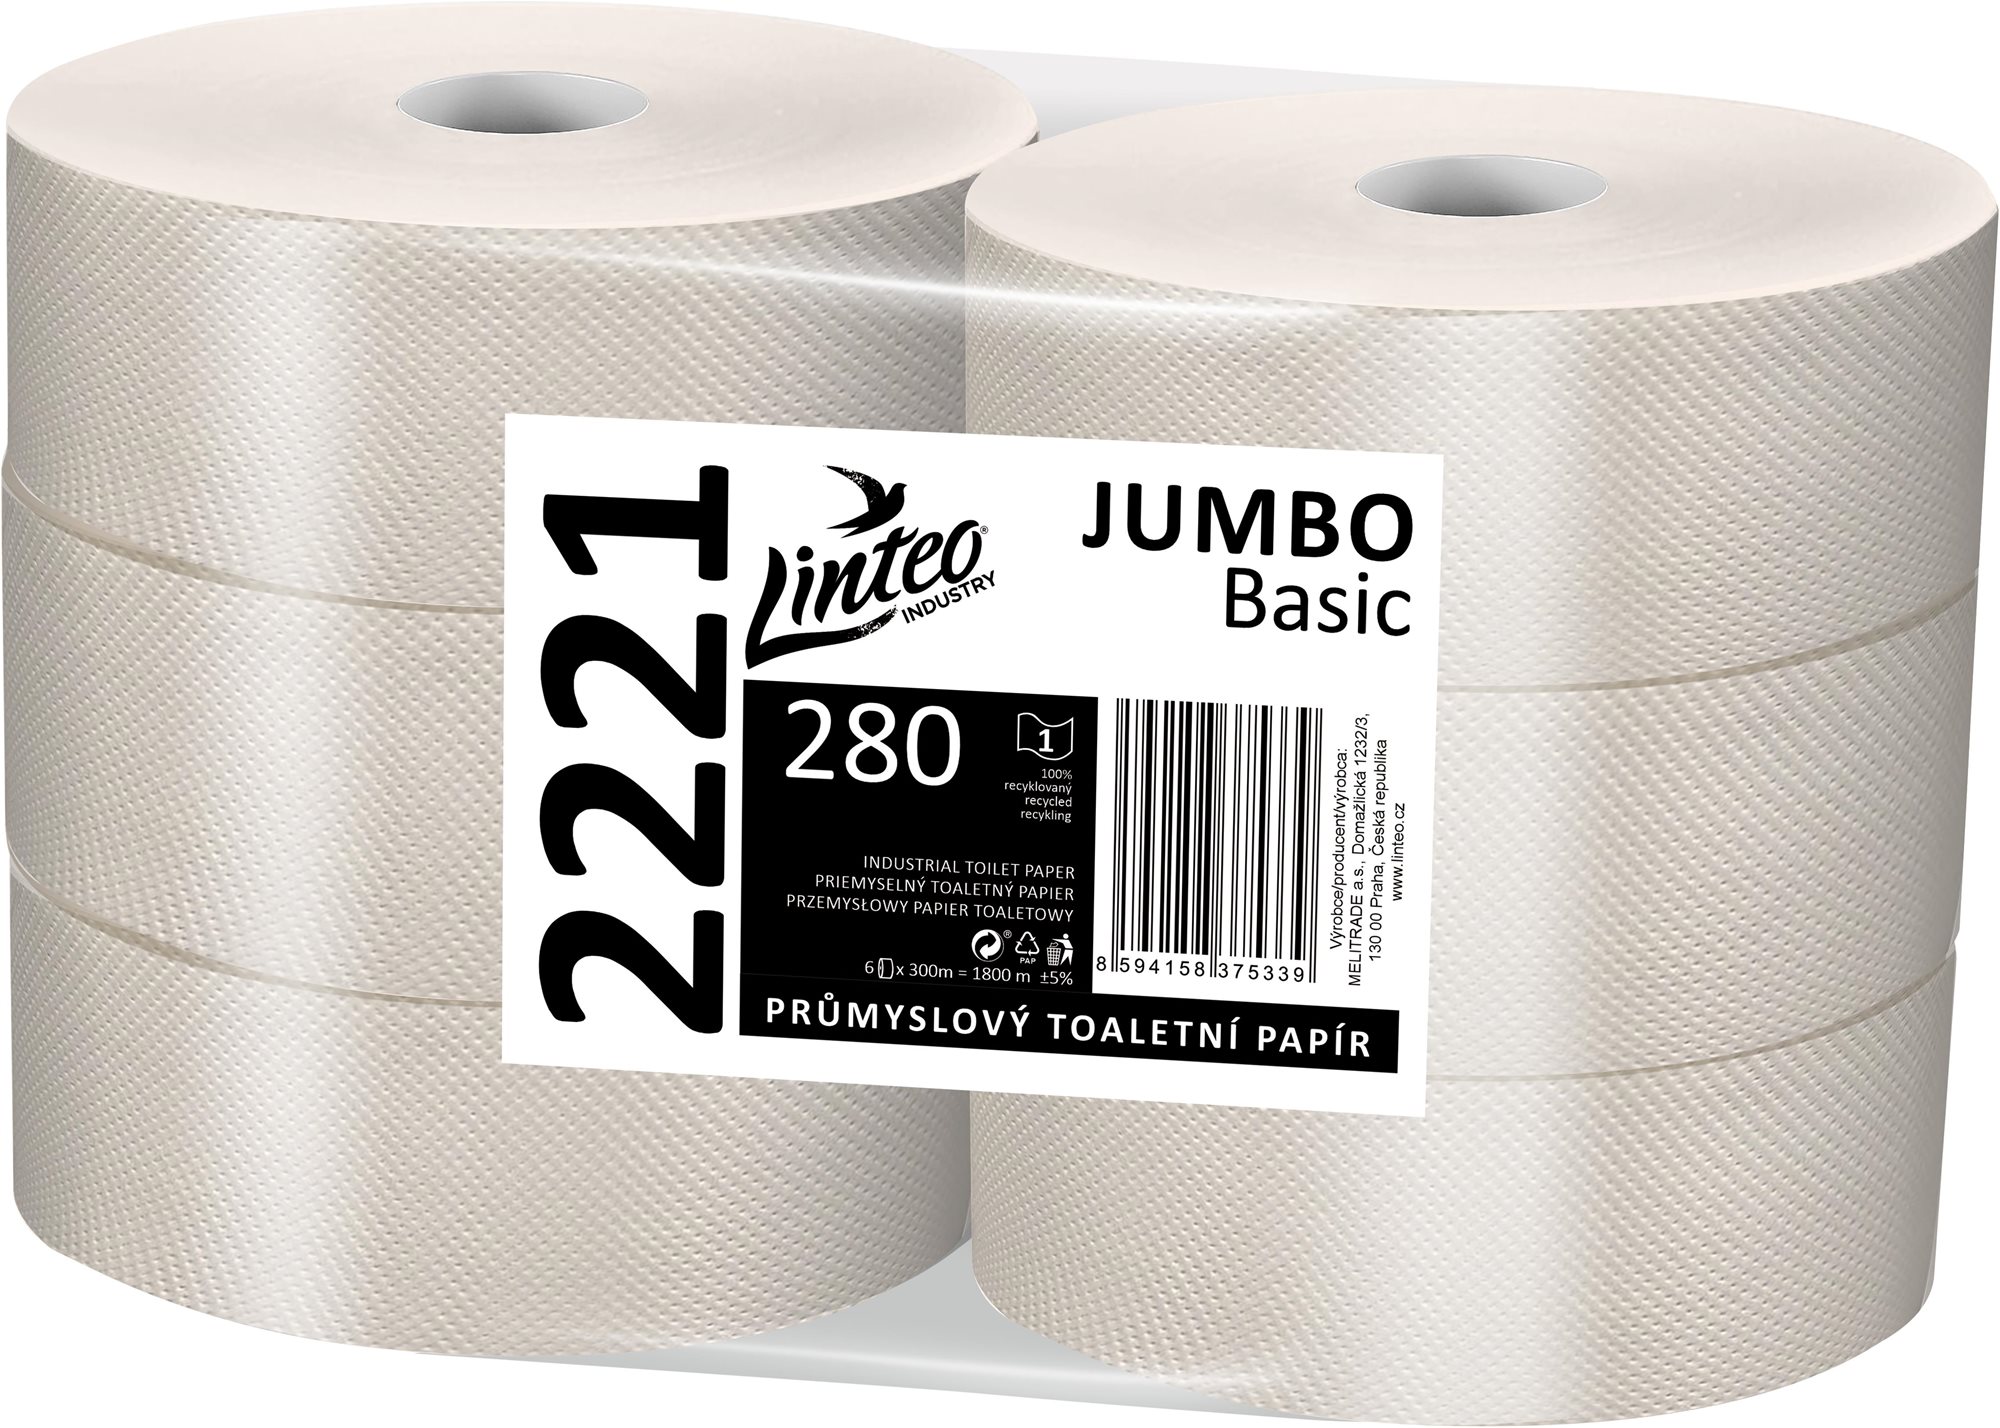 LINTEO Jumbo Basic 280 (6 db)